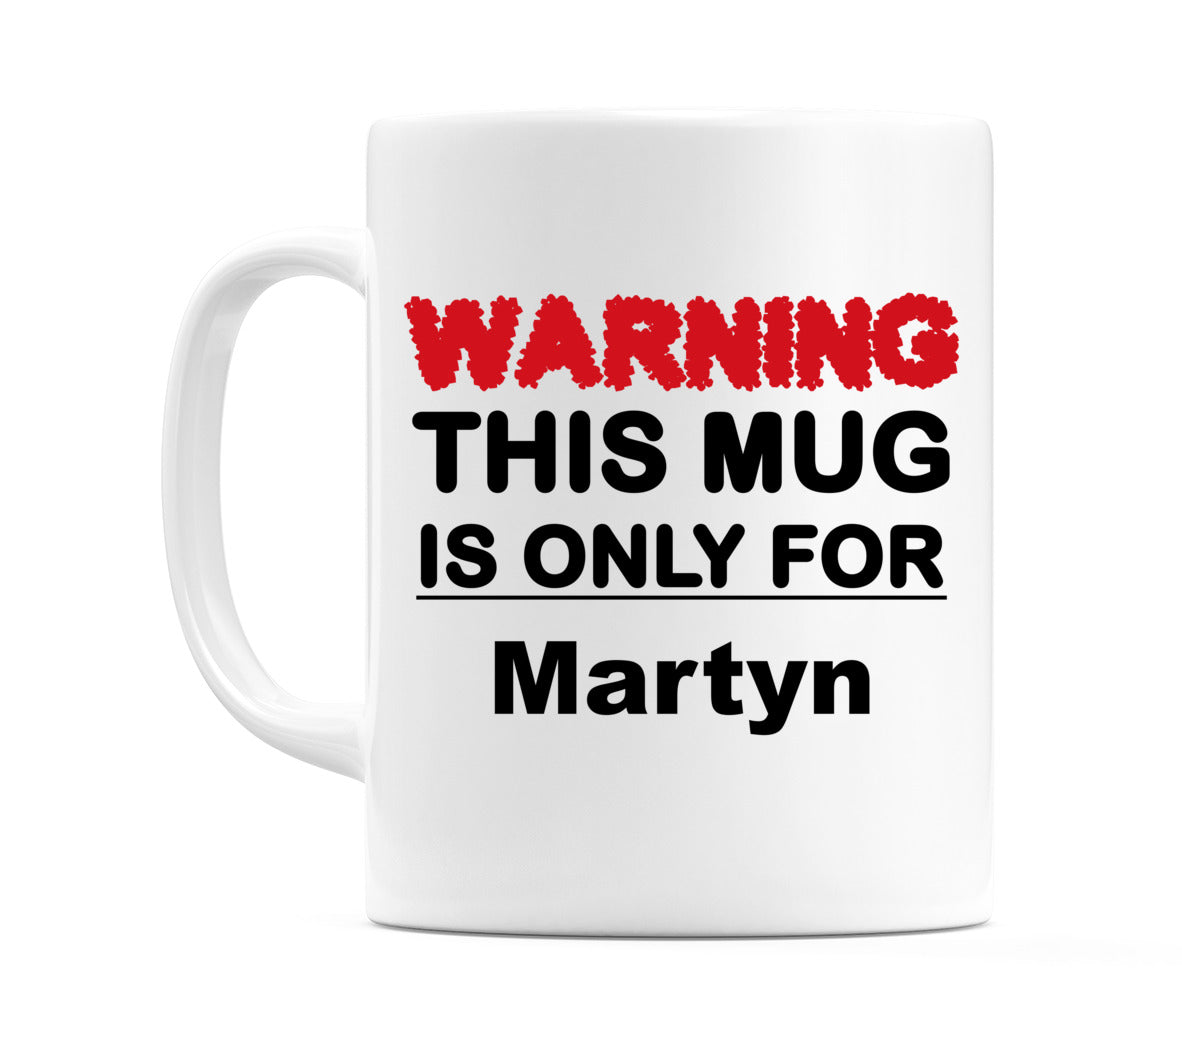 Warning This Mug is ONLY for Martyn Mug